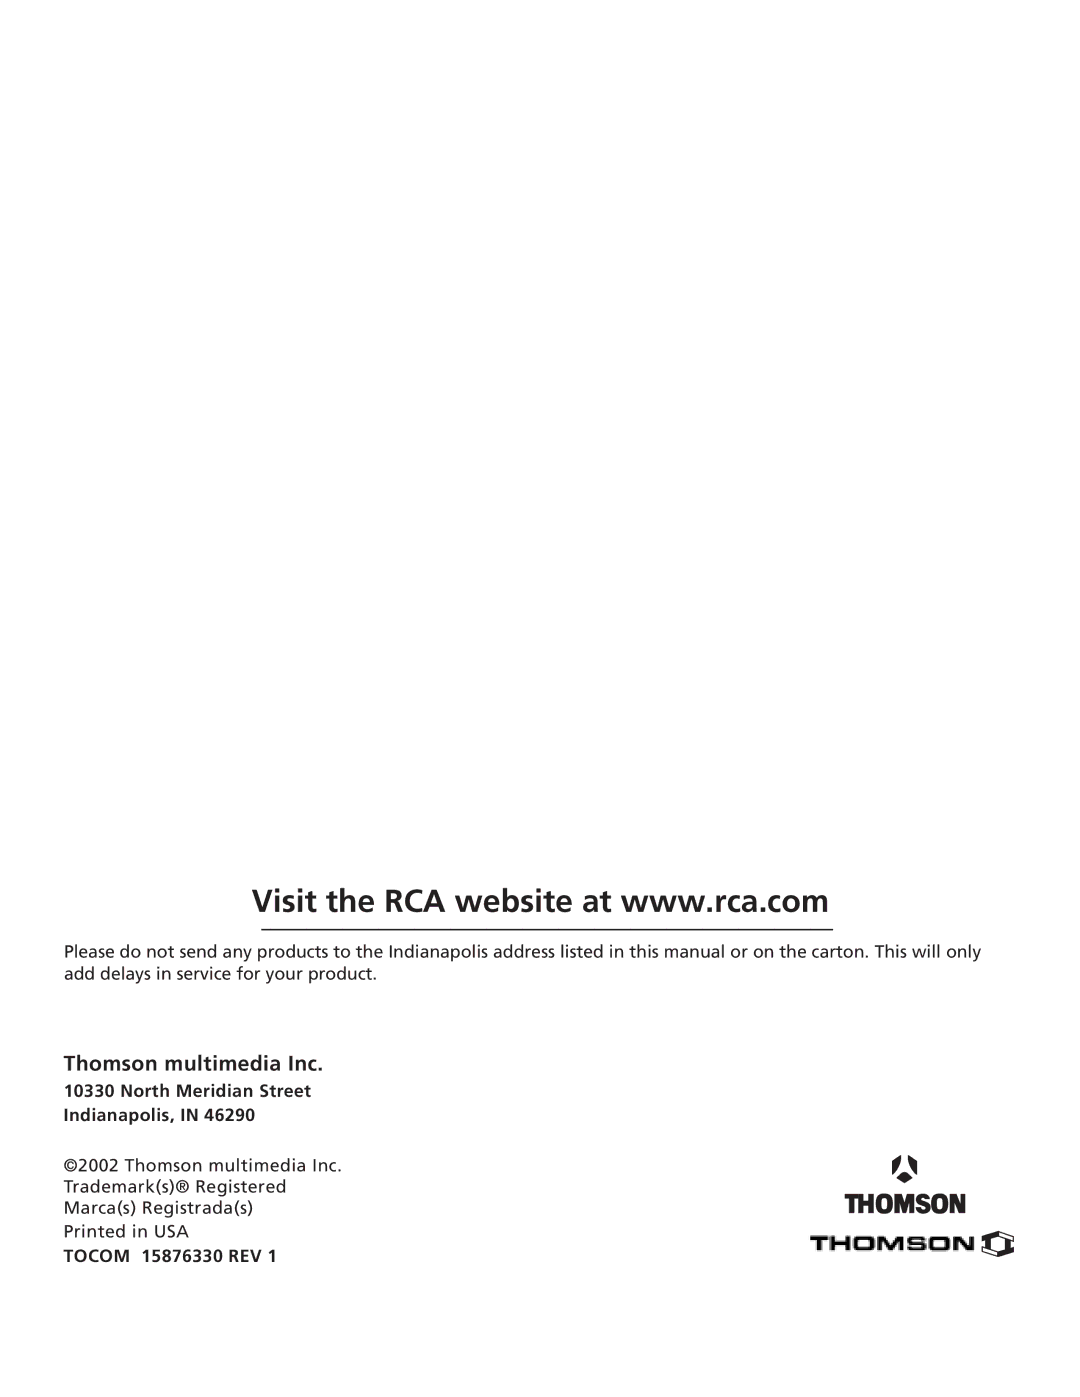 RCA HD61W140, HD65W140 manual Thomson multimedia Inc, North Meridian Street Indianapolis, Tocom 15876330 REV 